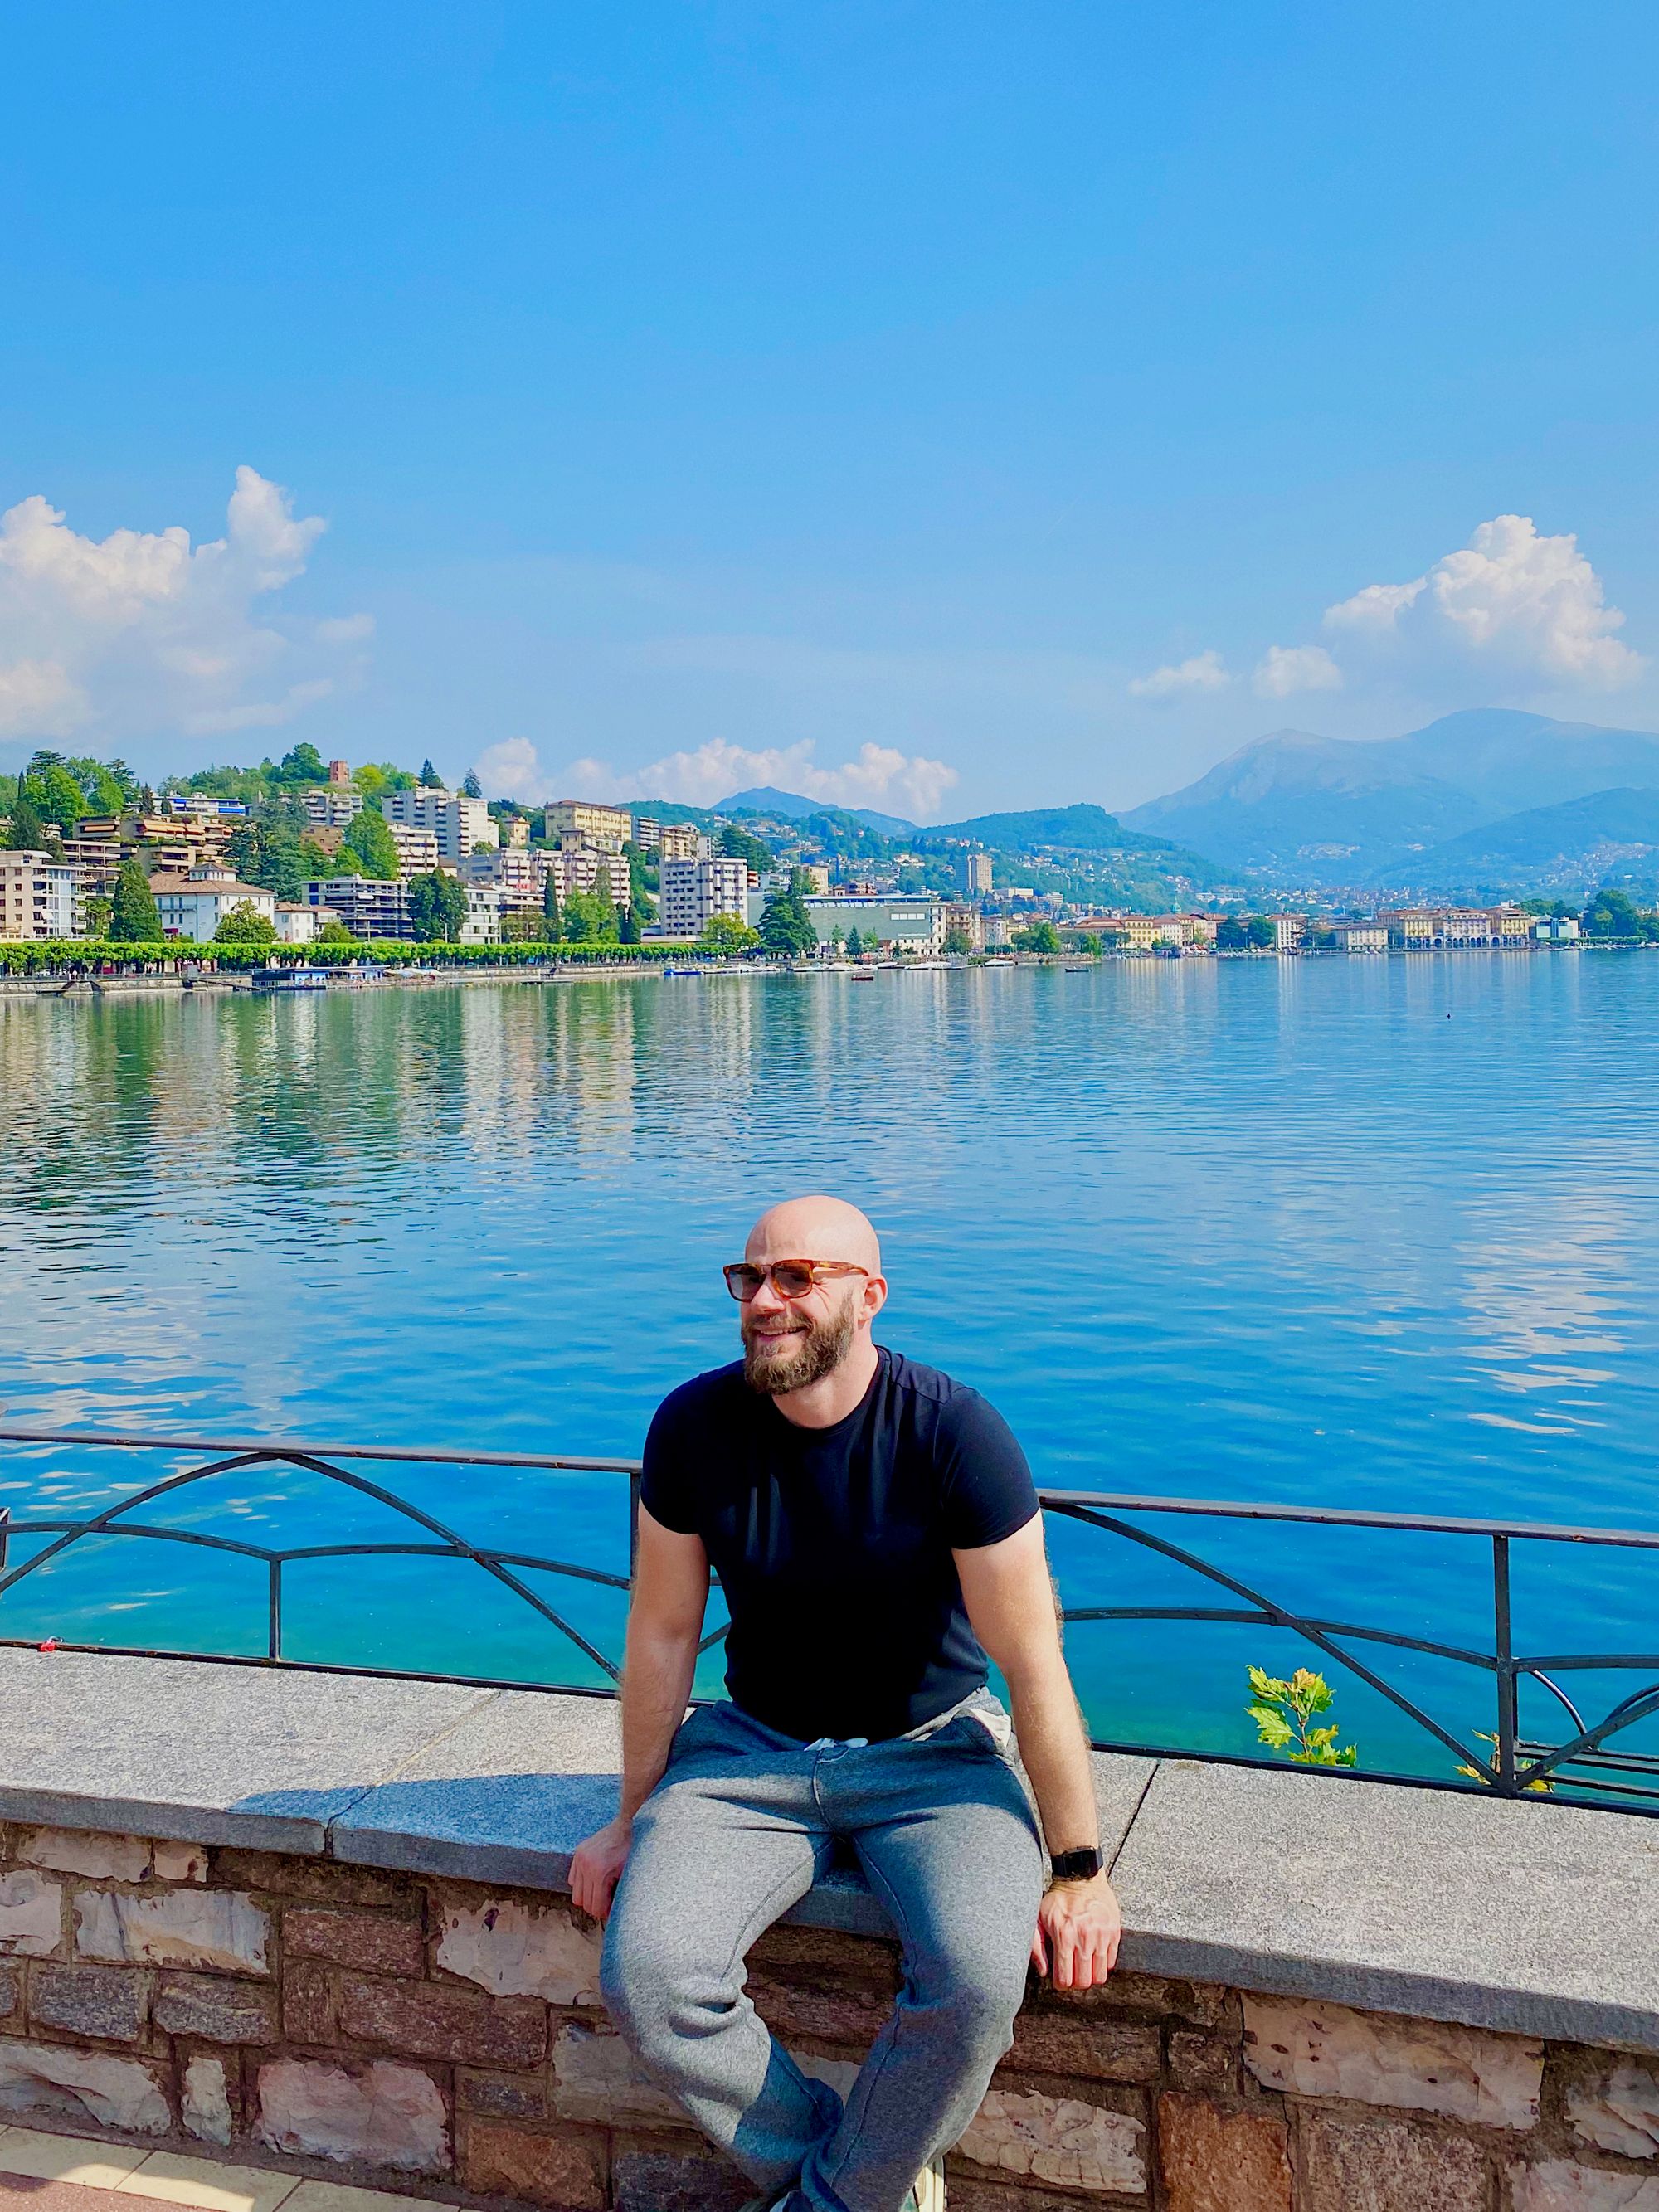 Me sun basking on the shore of Lake Lugano in Switzerland